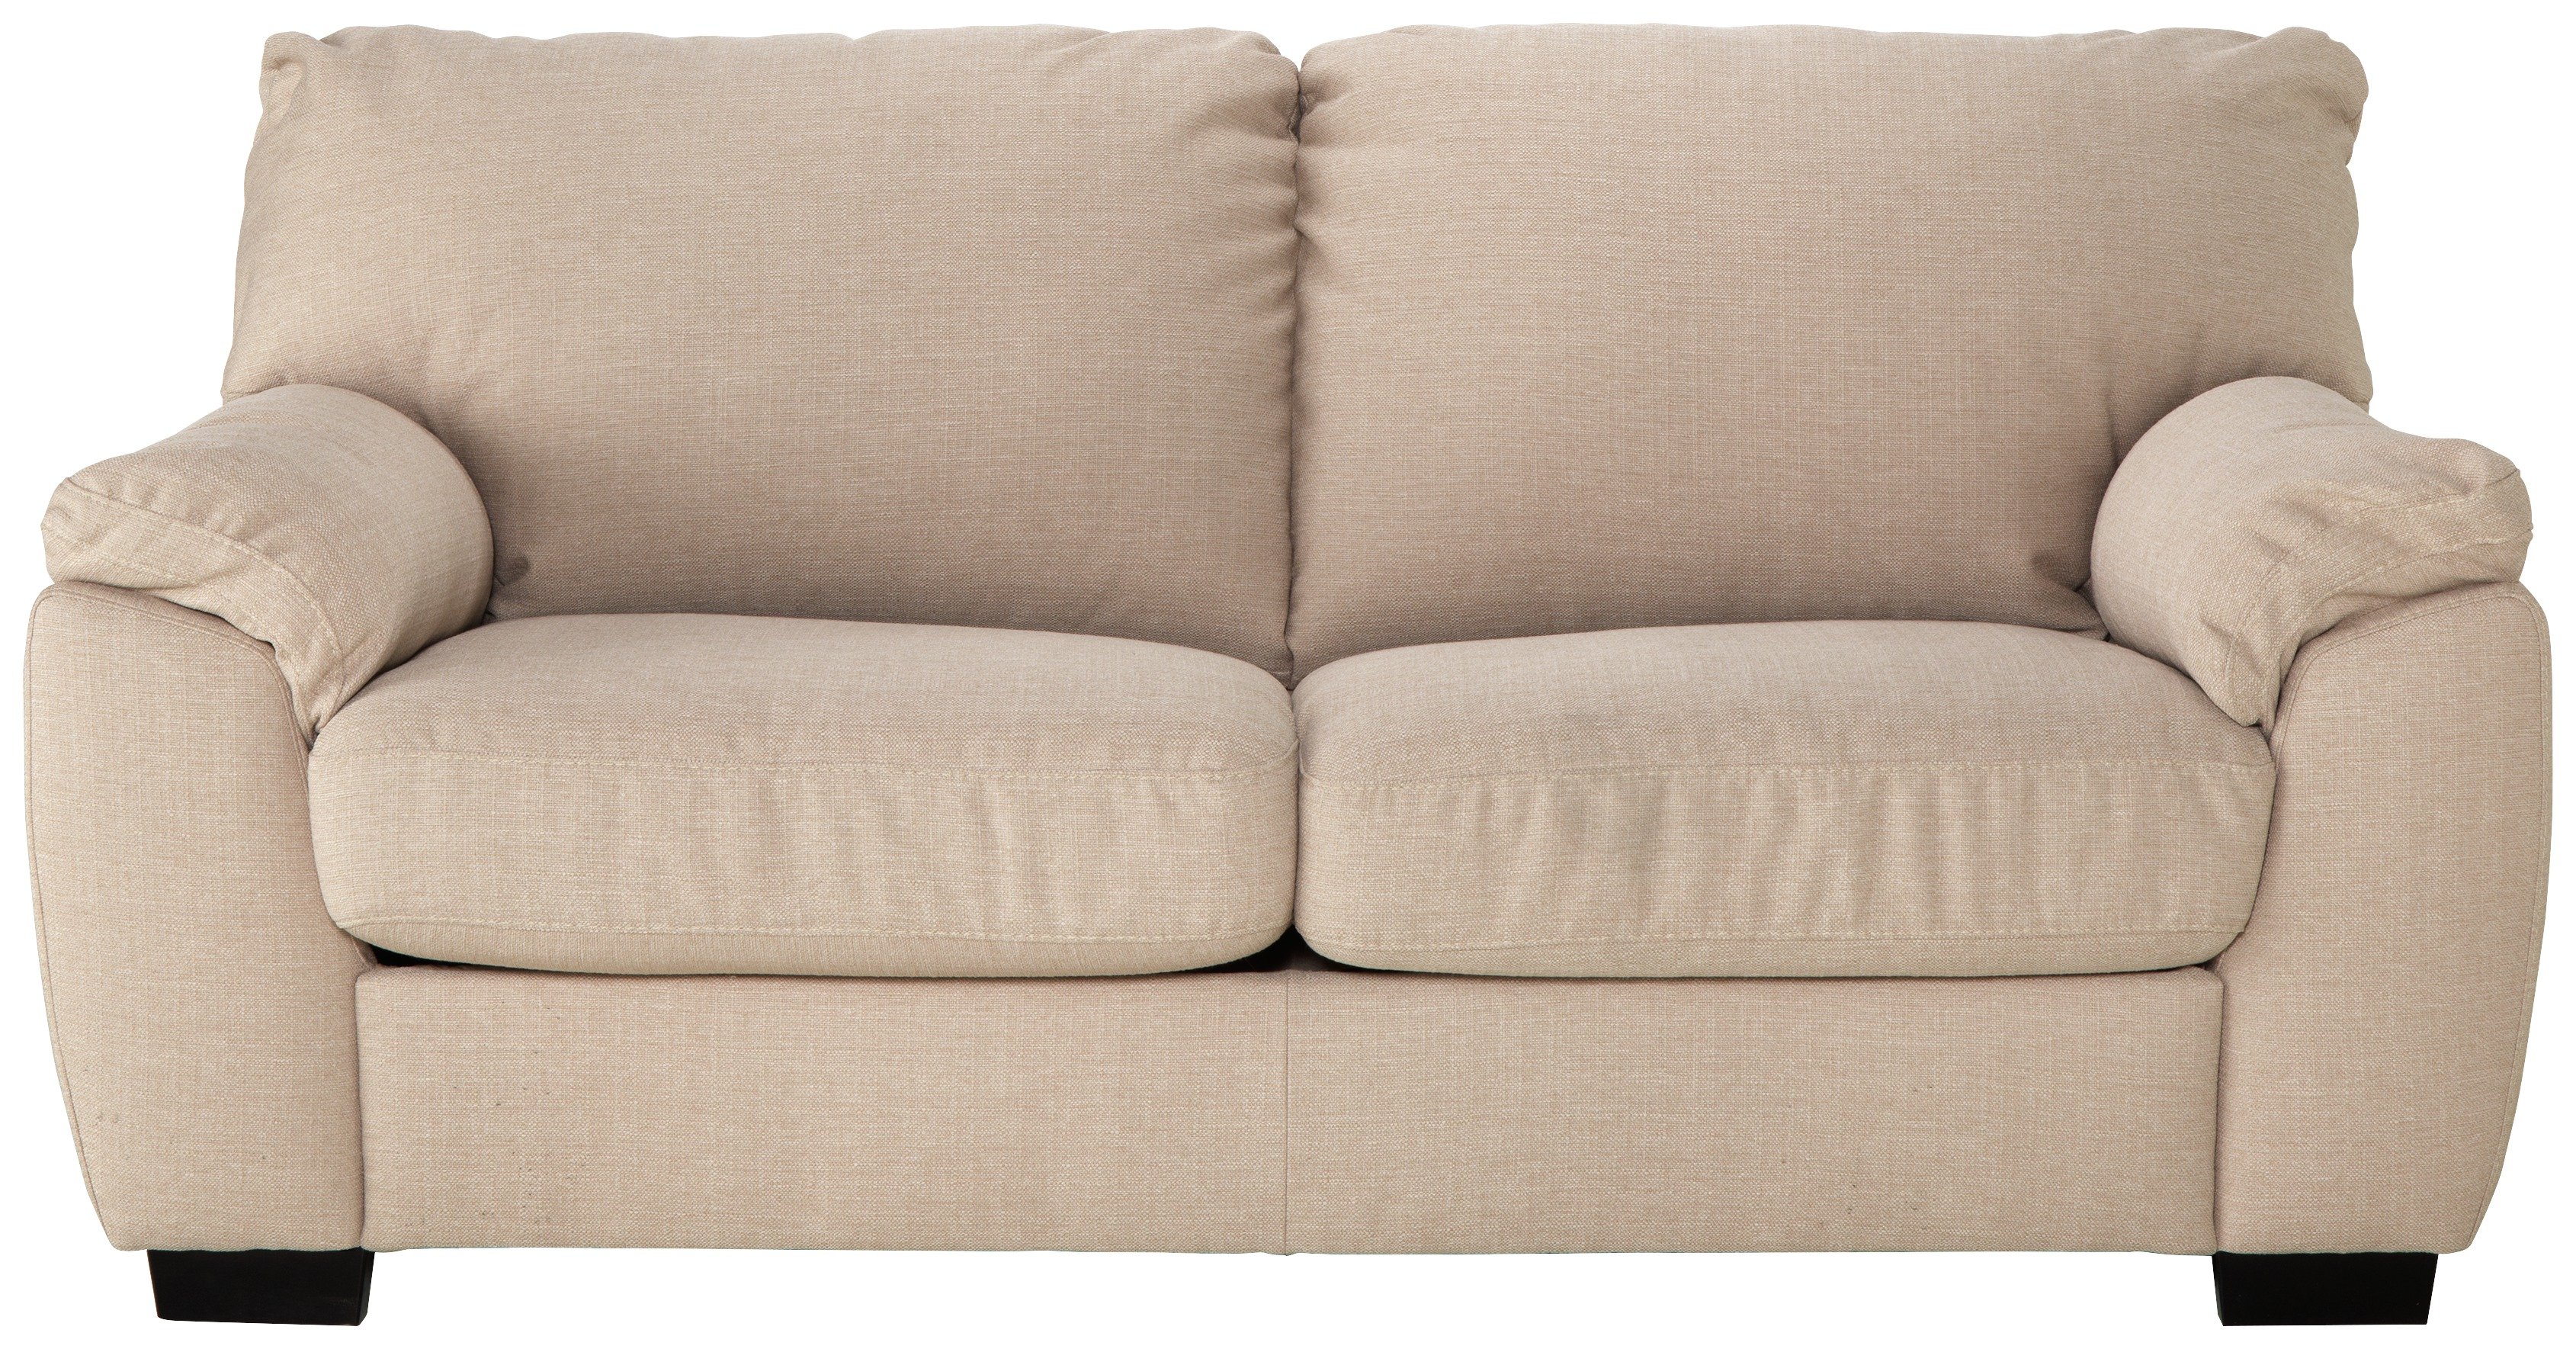 Argos Home Milano 2 Seater Fabric Sofa Bed - Beige